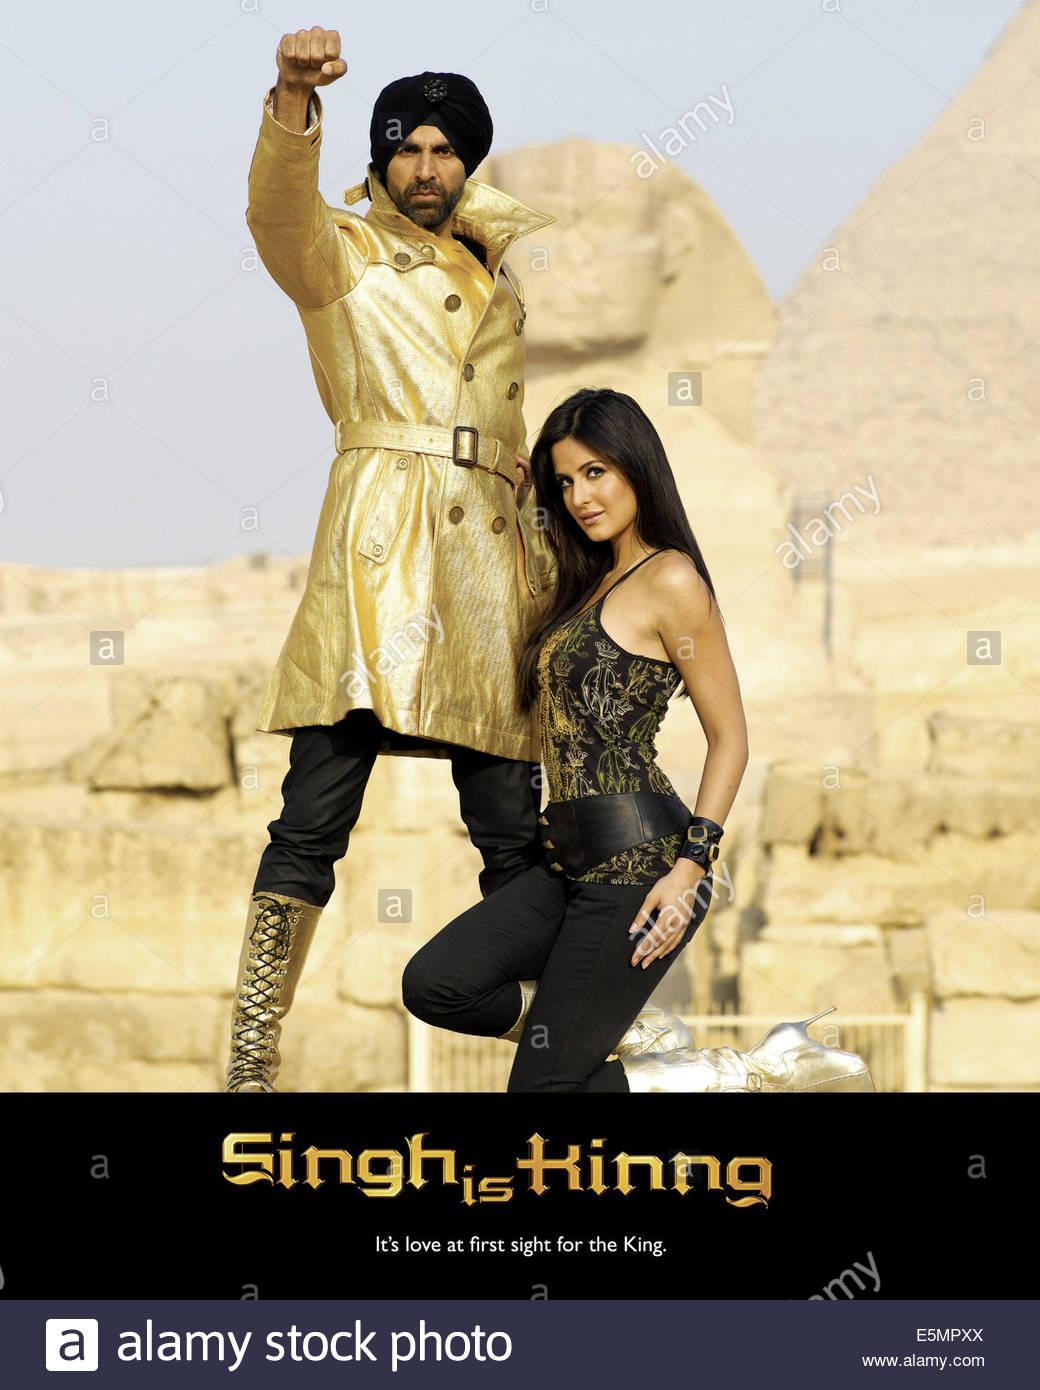 Singh is king Full movie download in 720p. 